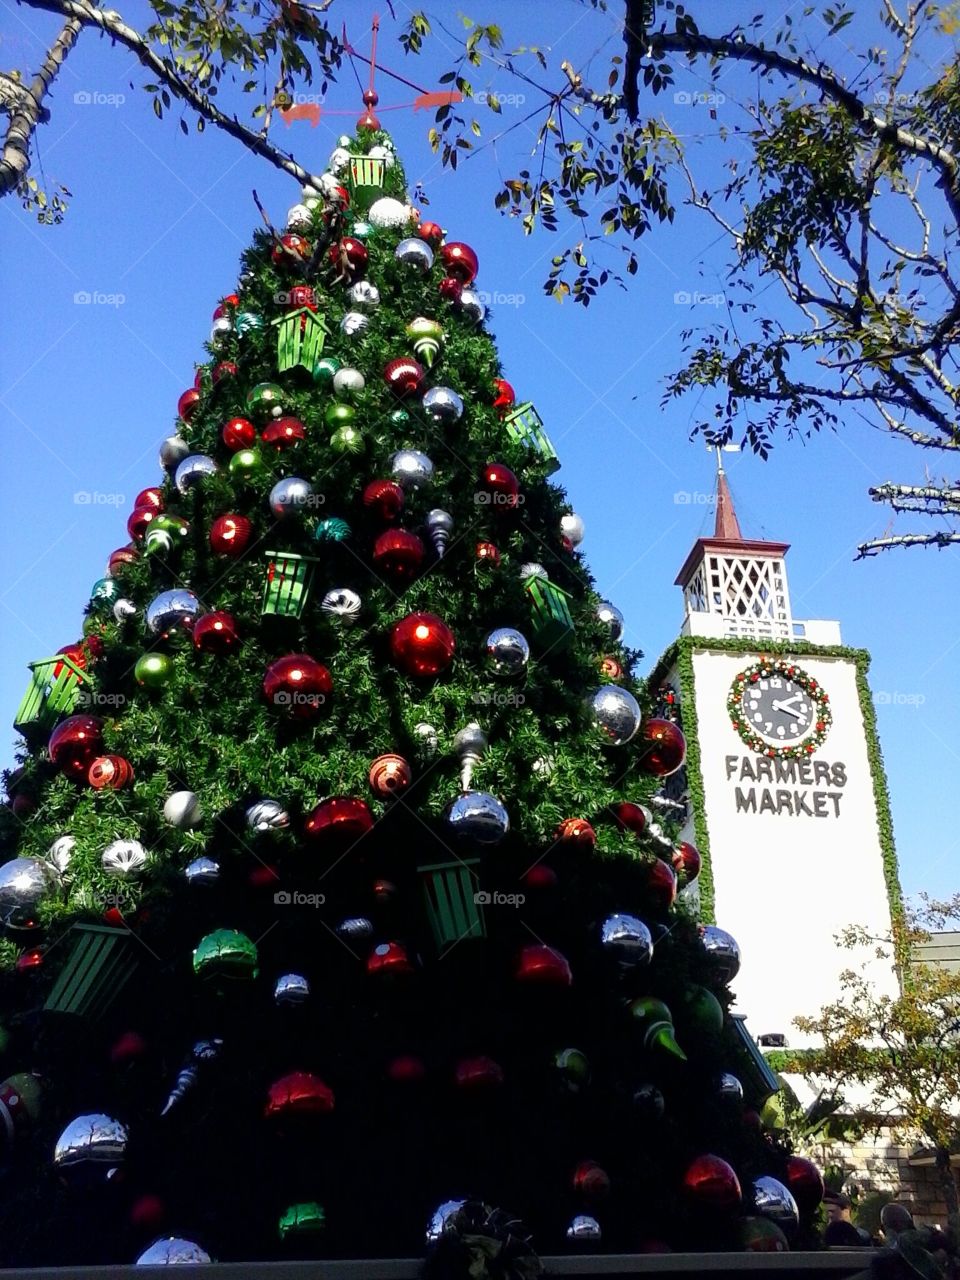 Christmas tree at Farmers Market.